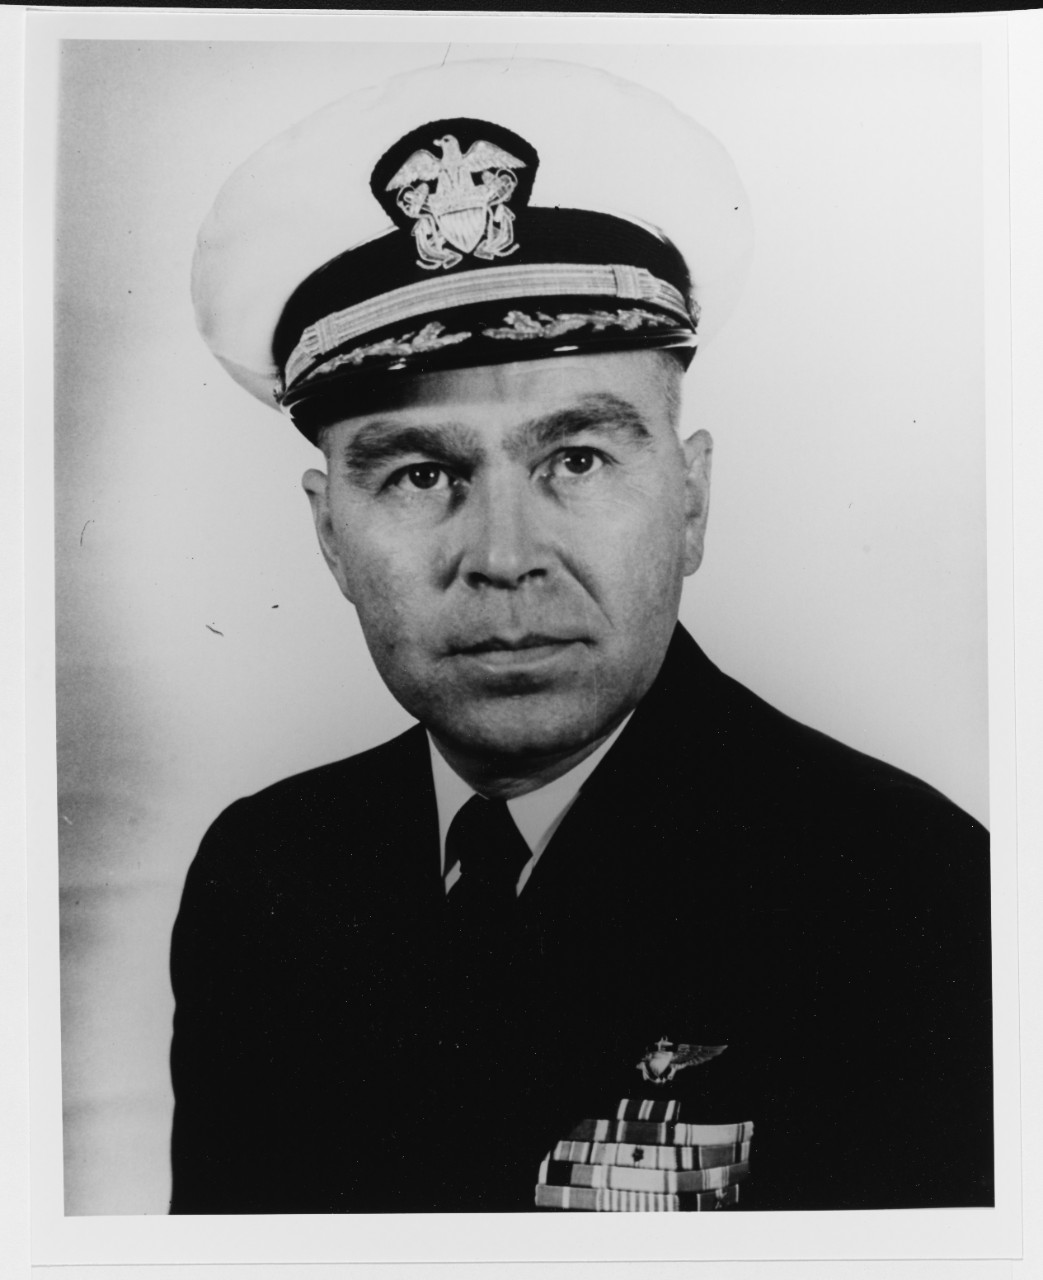 NH 95397 Captain Charles E. Roemer, USN